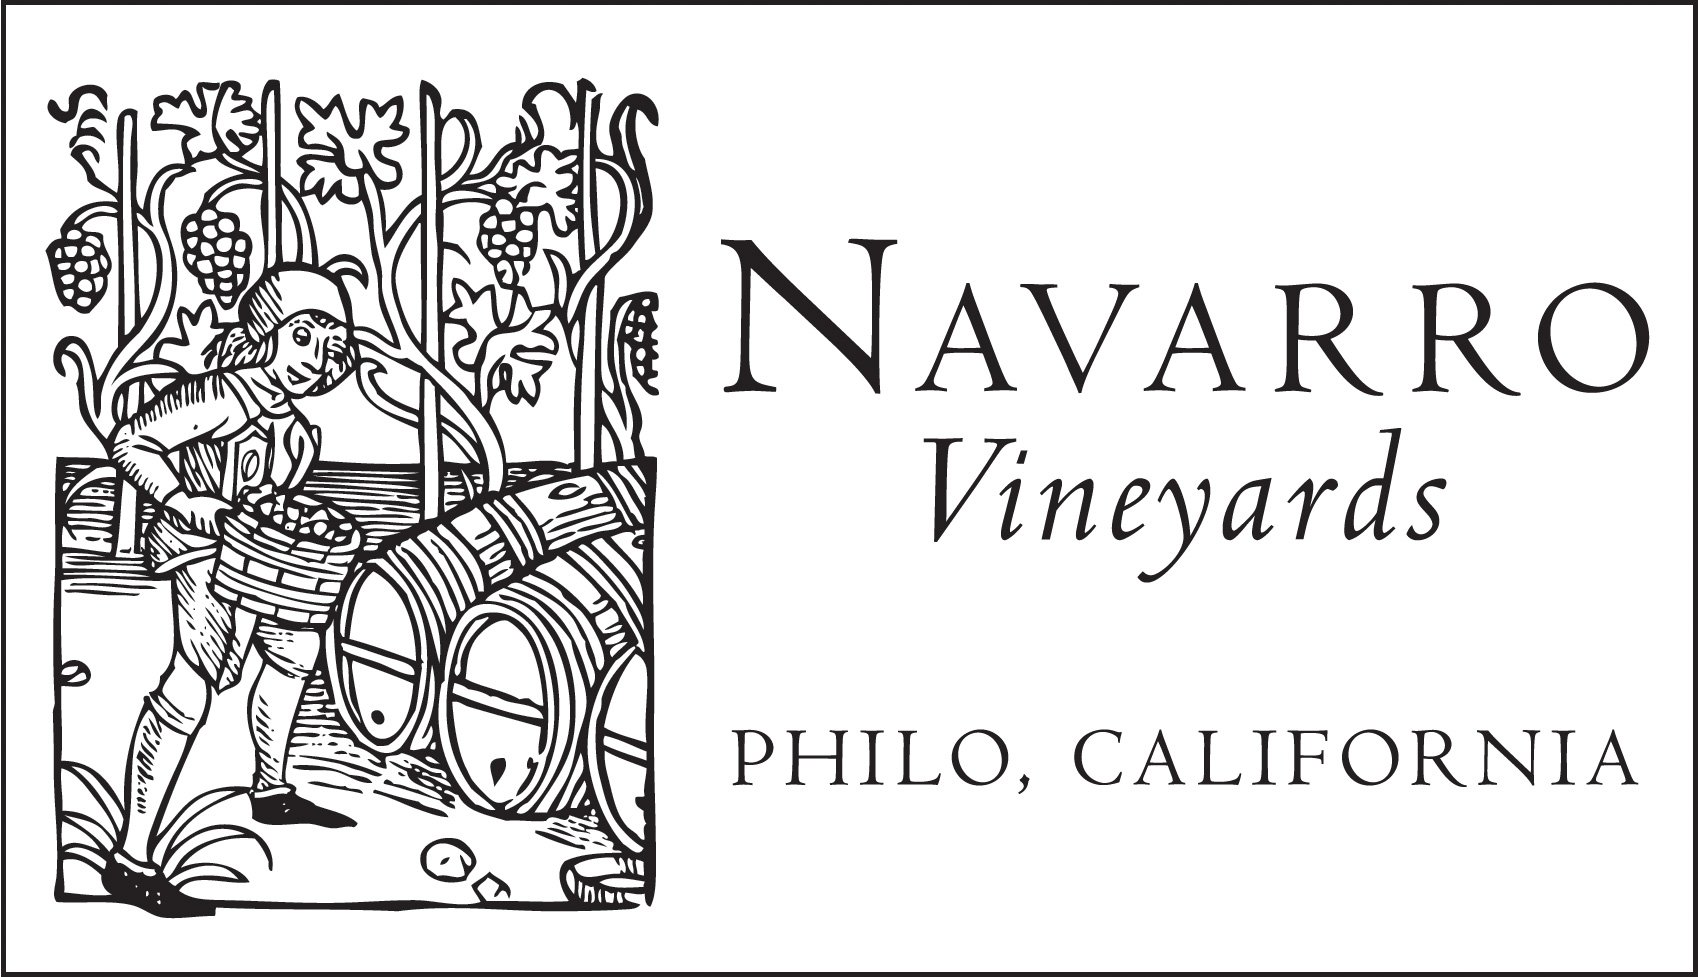 Navarro Vineyards: Philo, California (Copy)